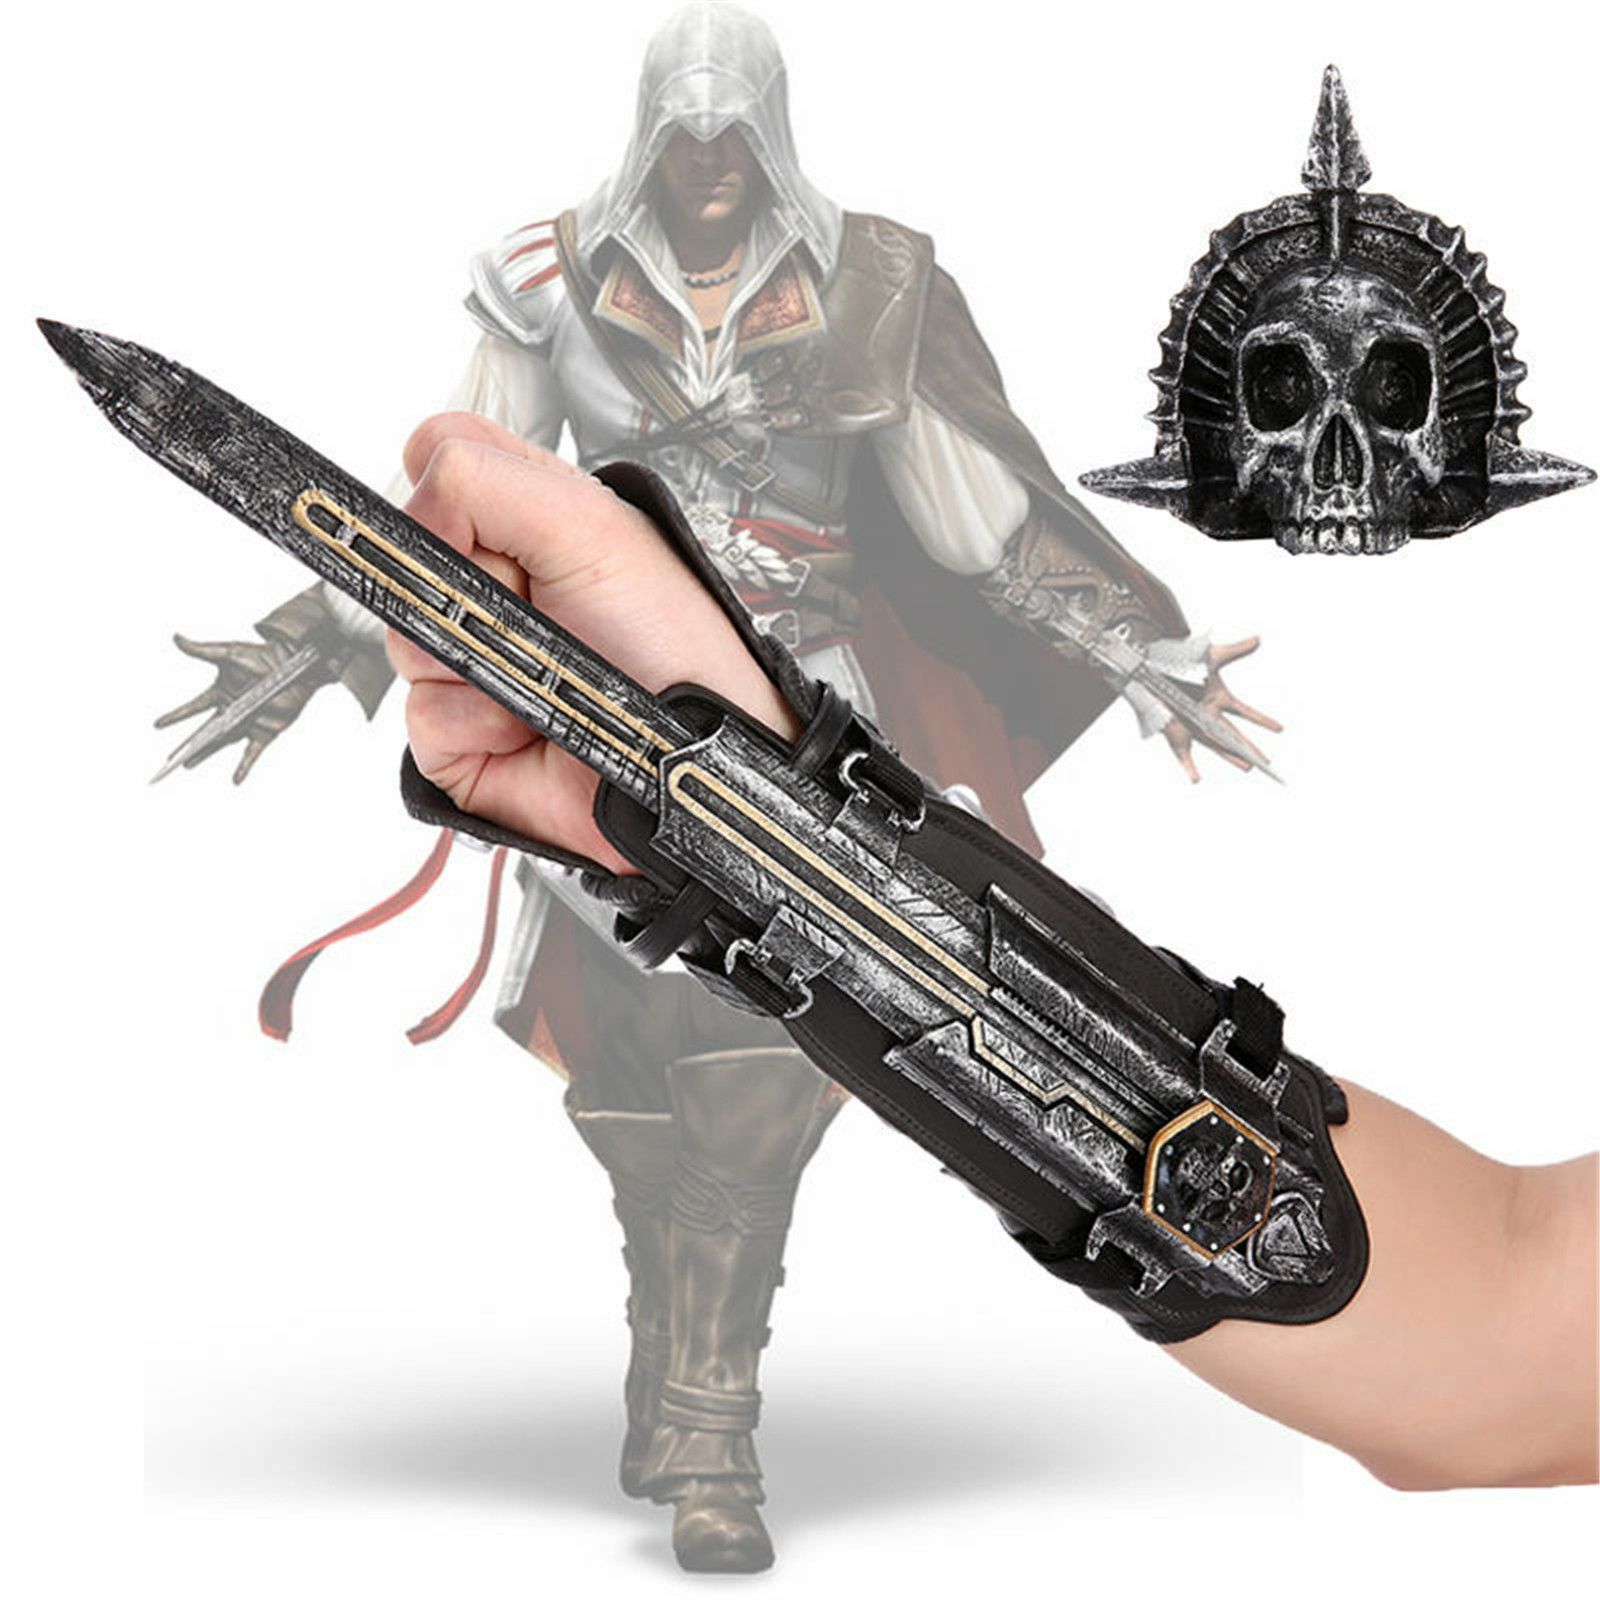 Assassin's Creed Hidden Blade Foam - Edward Kenway Gauntlet Props Replica